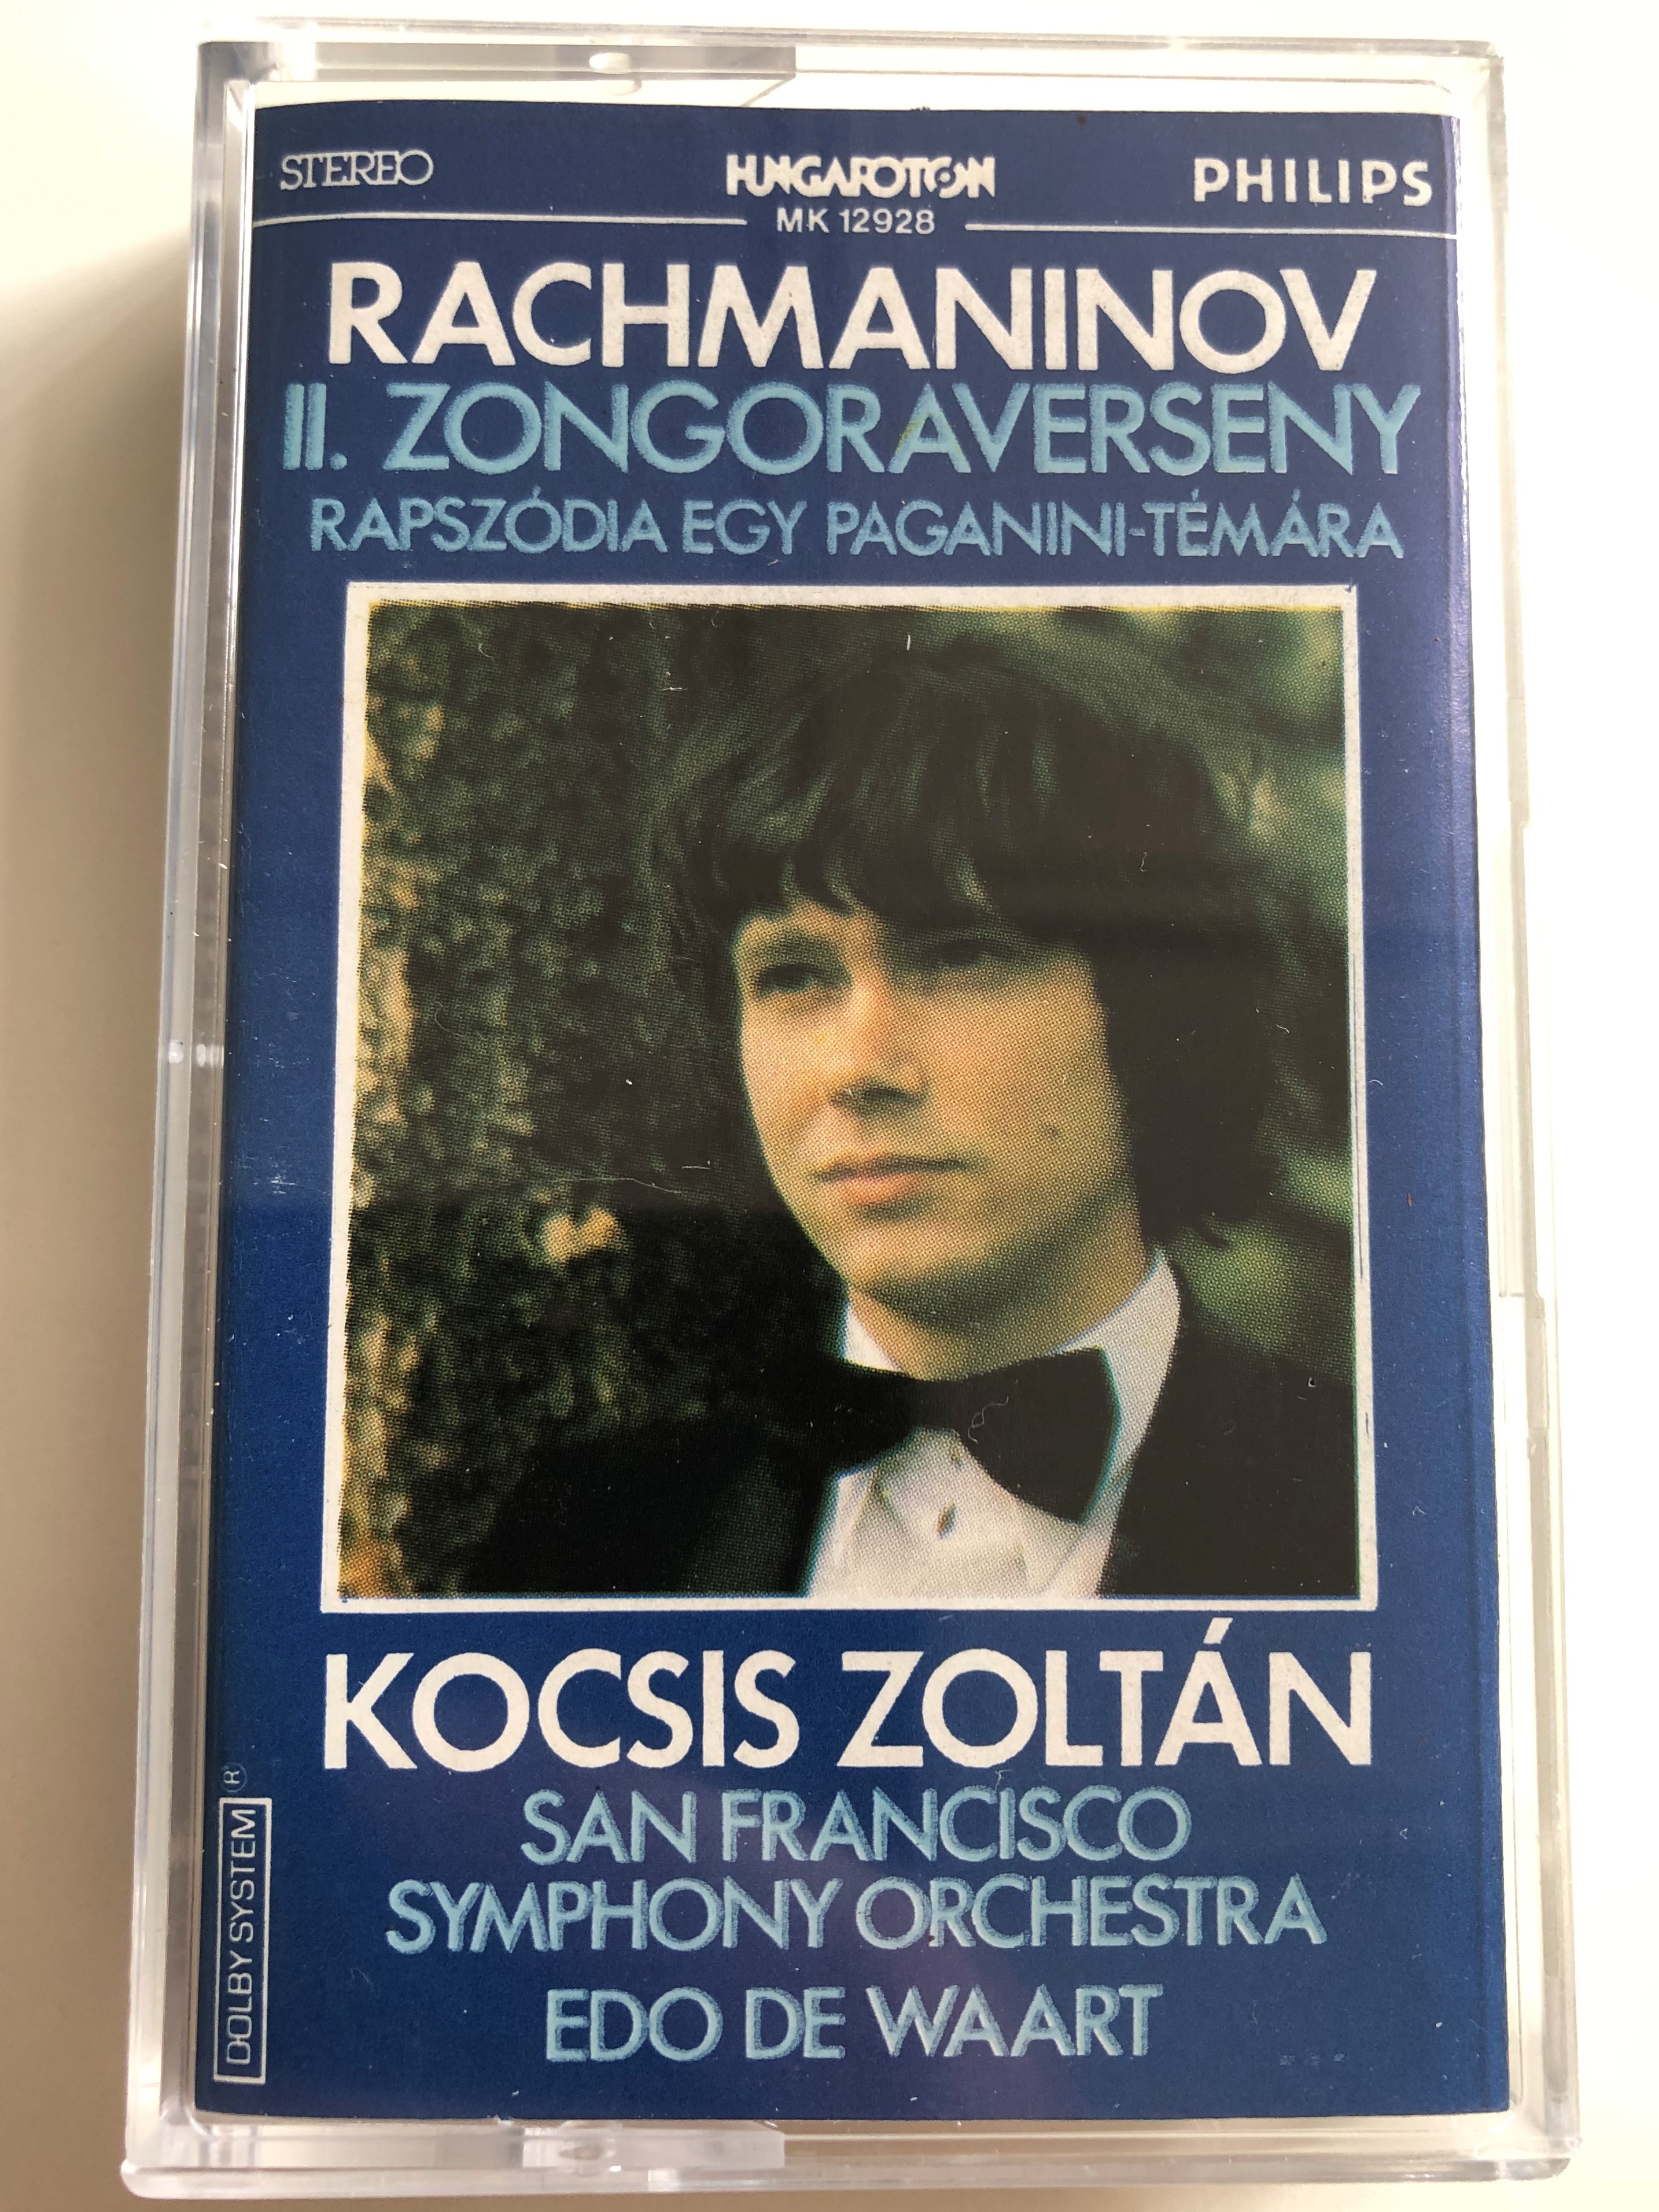 rachmaninov-ii.-zongoraverseny-rapsz-dia-egy-paganini-t-m-ra-kocsis-zolt-n-san-francisco-symphony-orchestra-conducted-edo-de-waart-hungaroton-cassette-stereo-mk-12928-1-.jpg